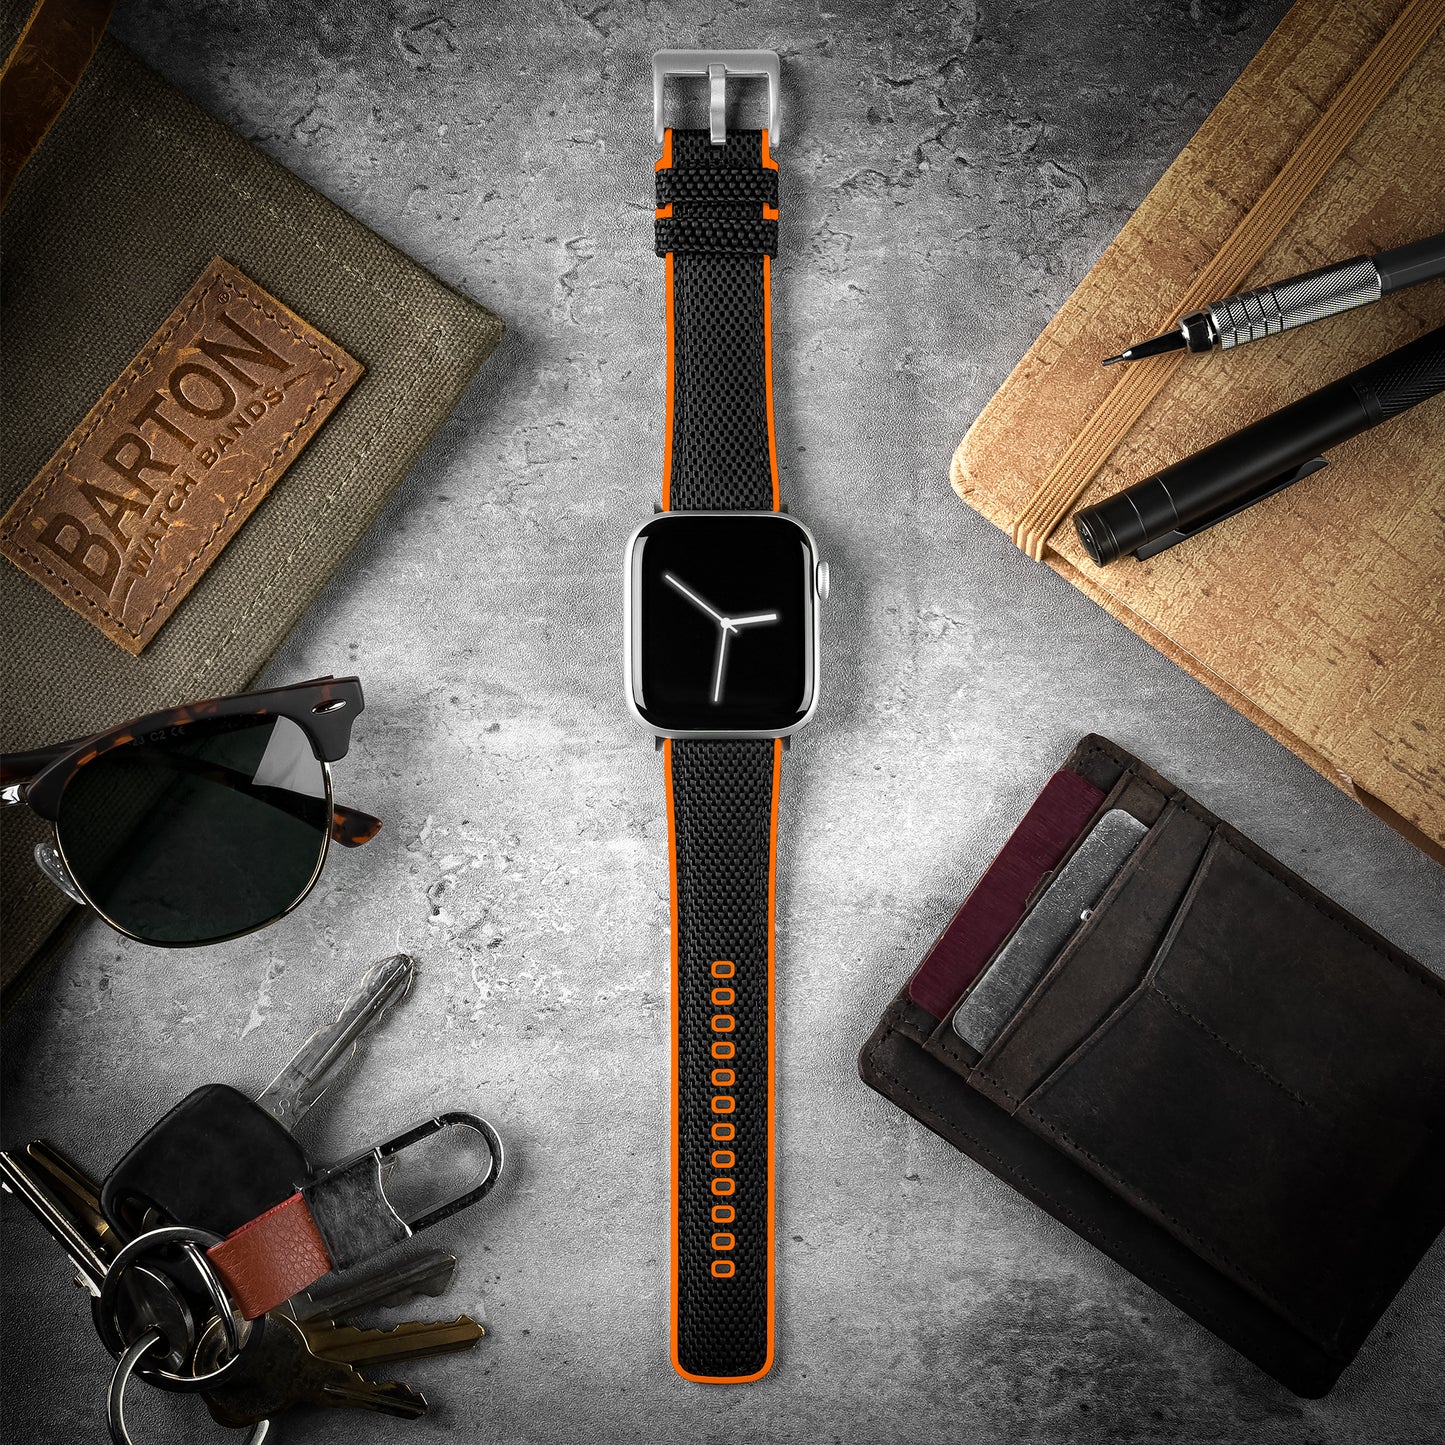 Apple Watch Black Cordura Fabric And Pumpkin Orange Silicone Hybrid Watch Band